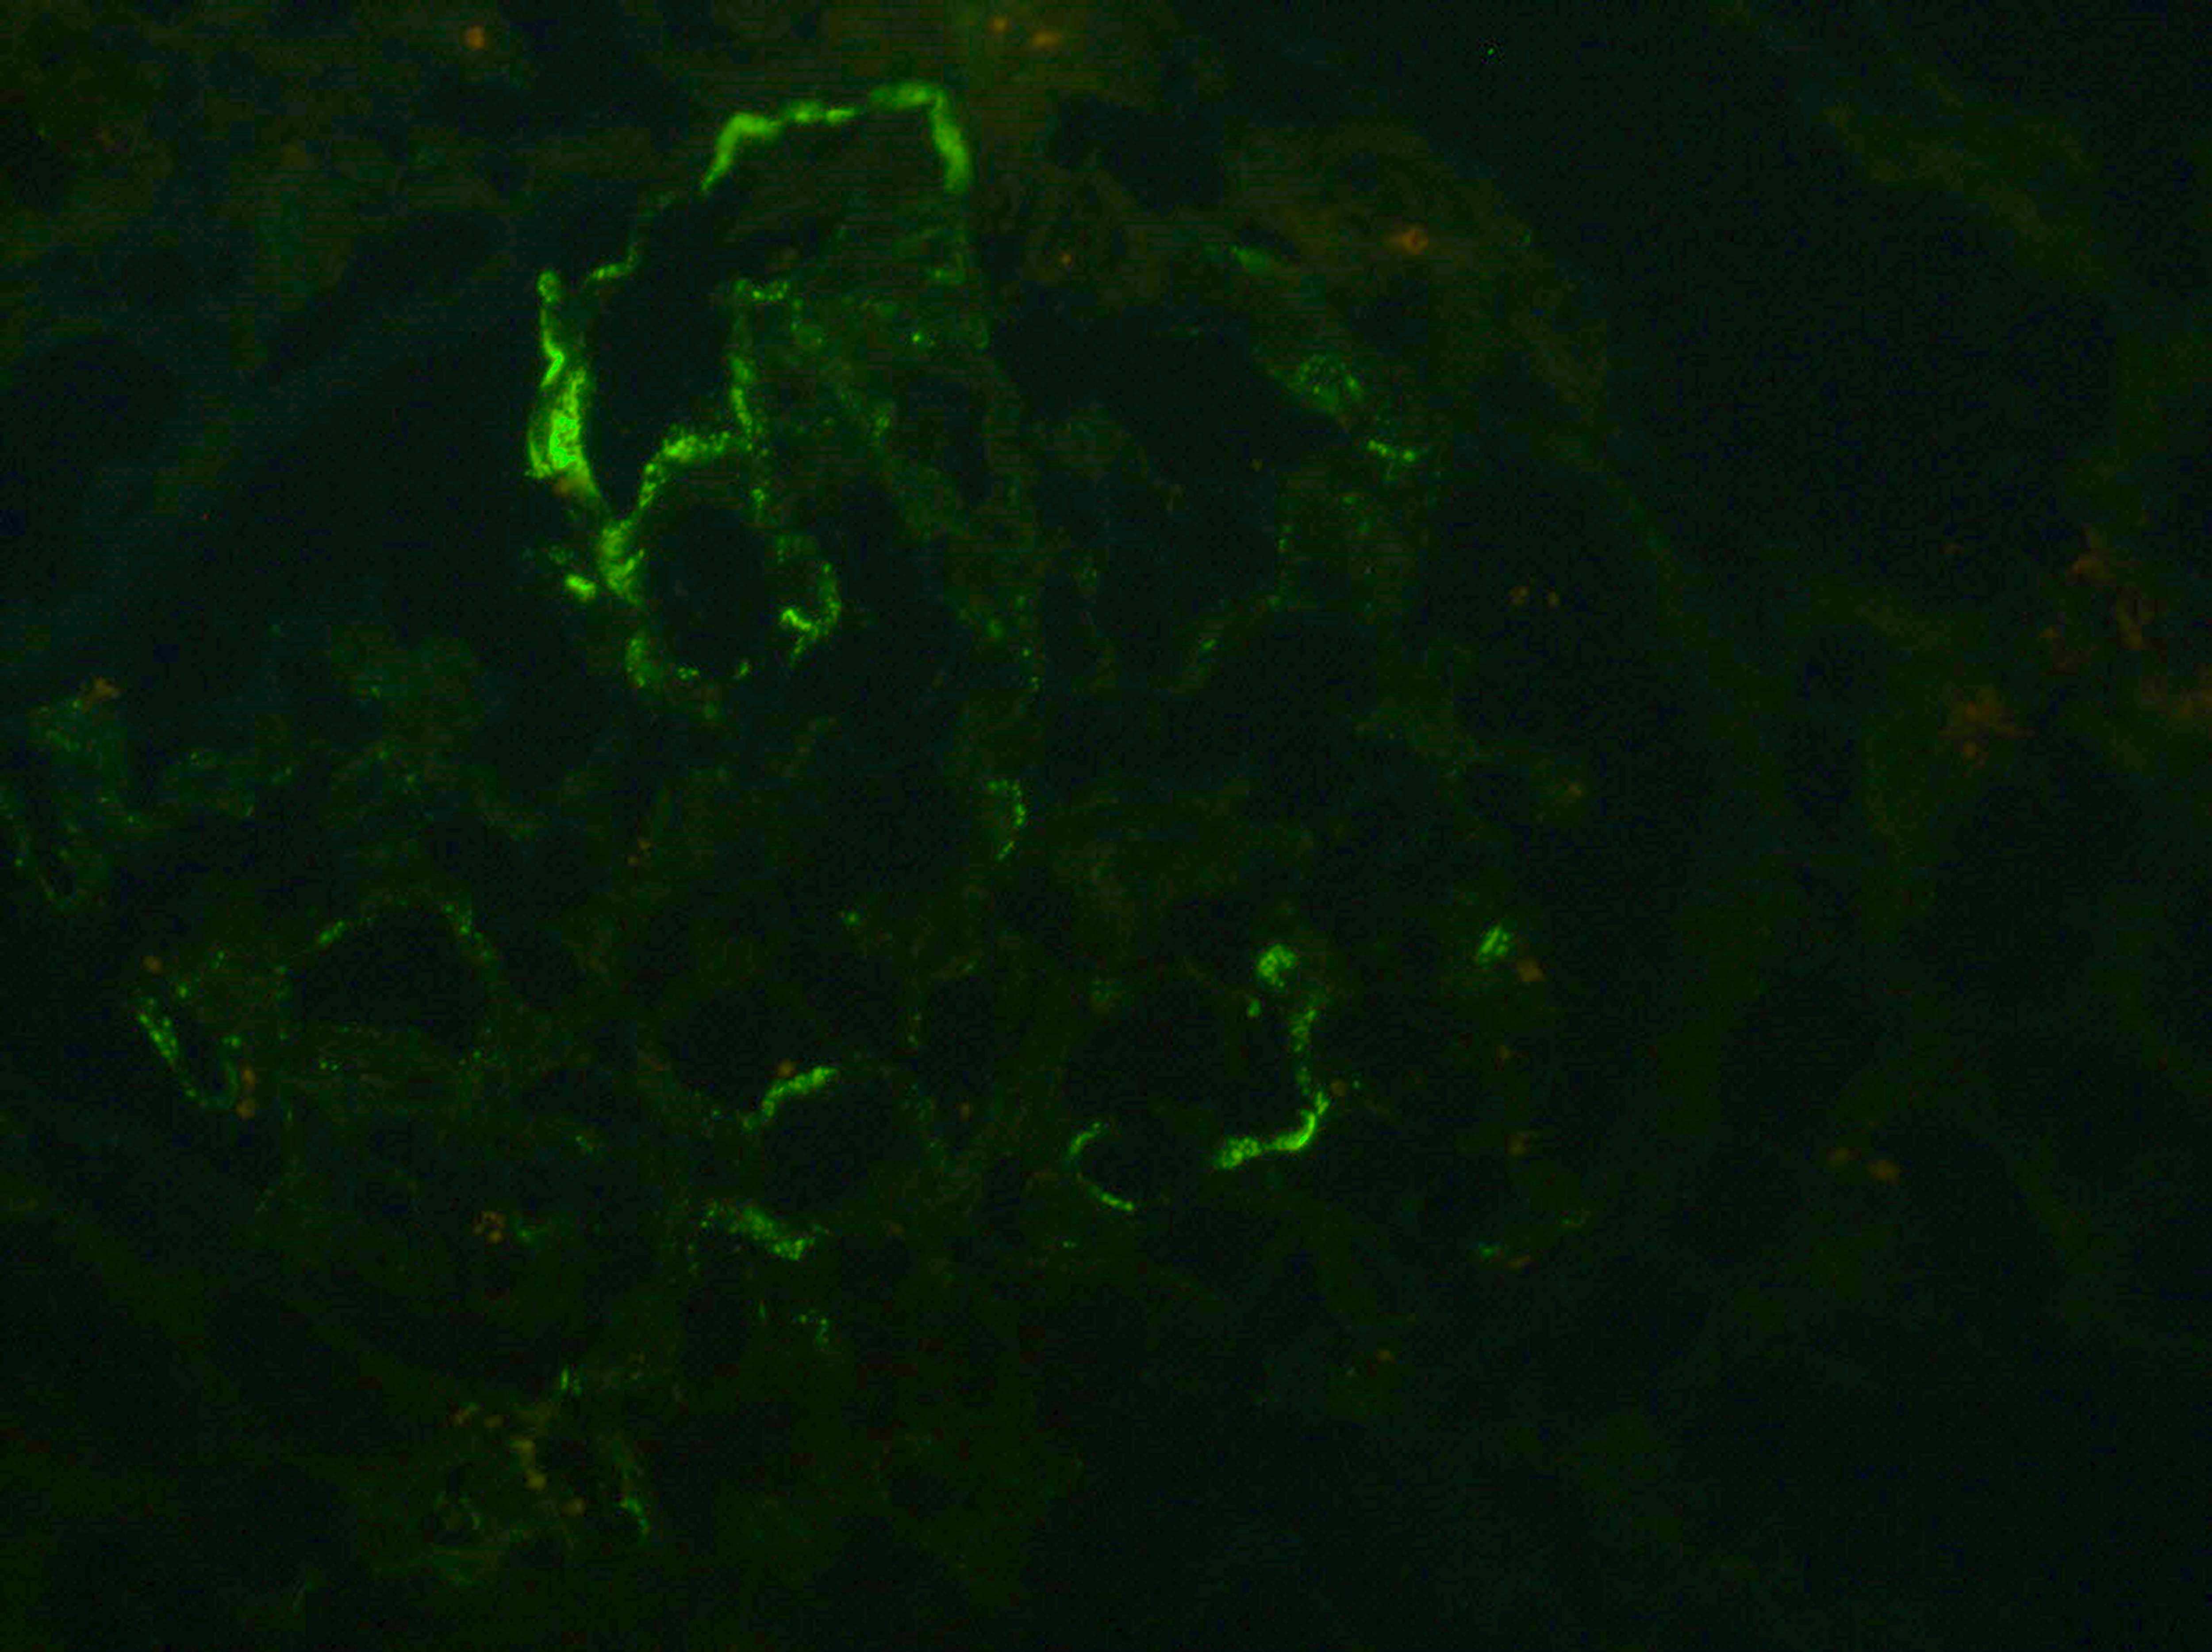 Nonspecific IgM deposition, immunofluorescence